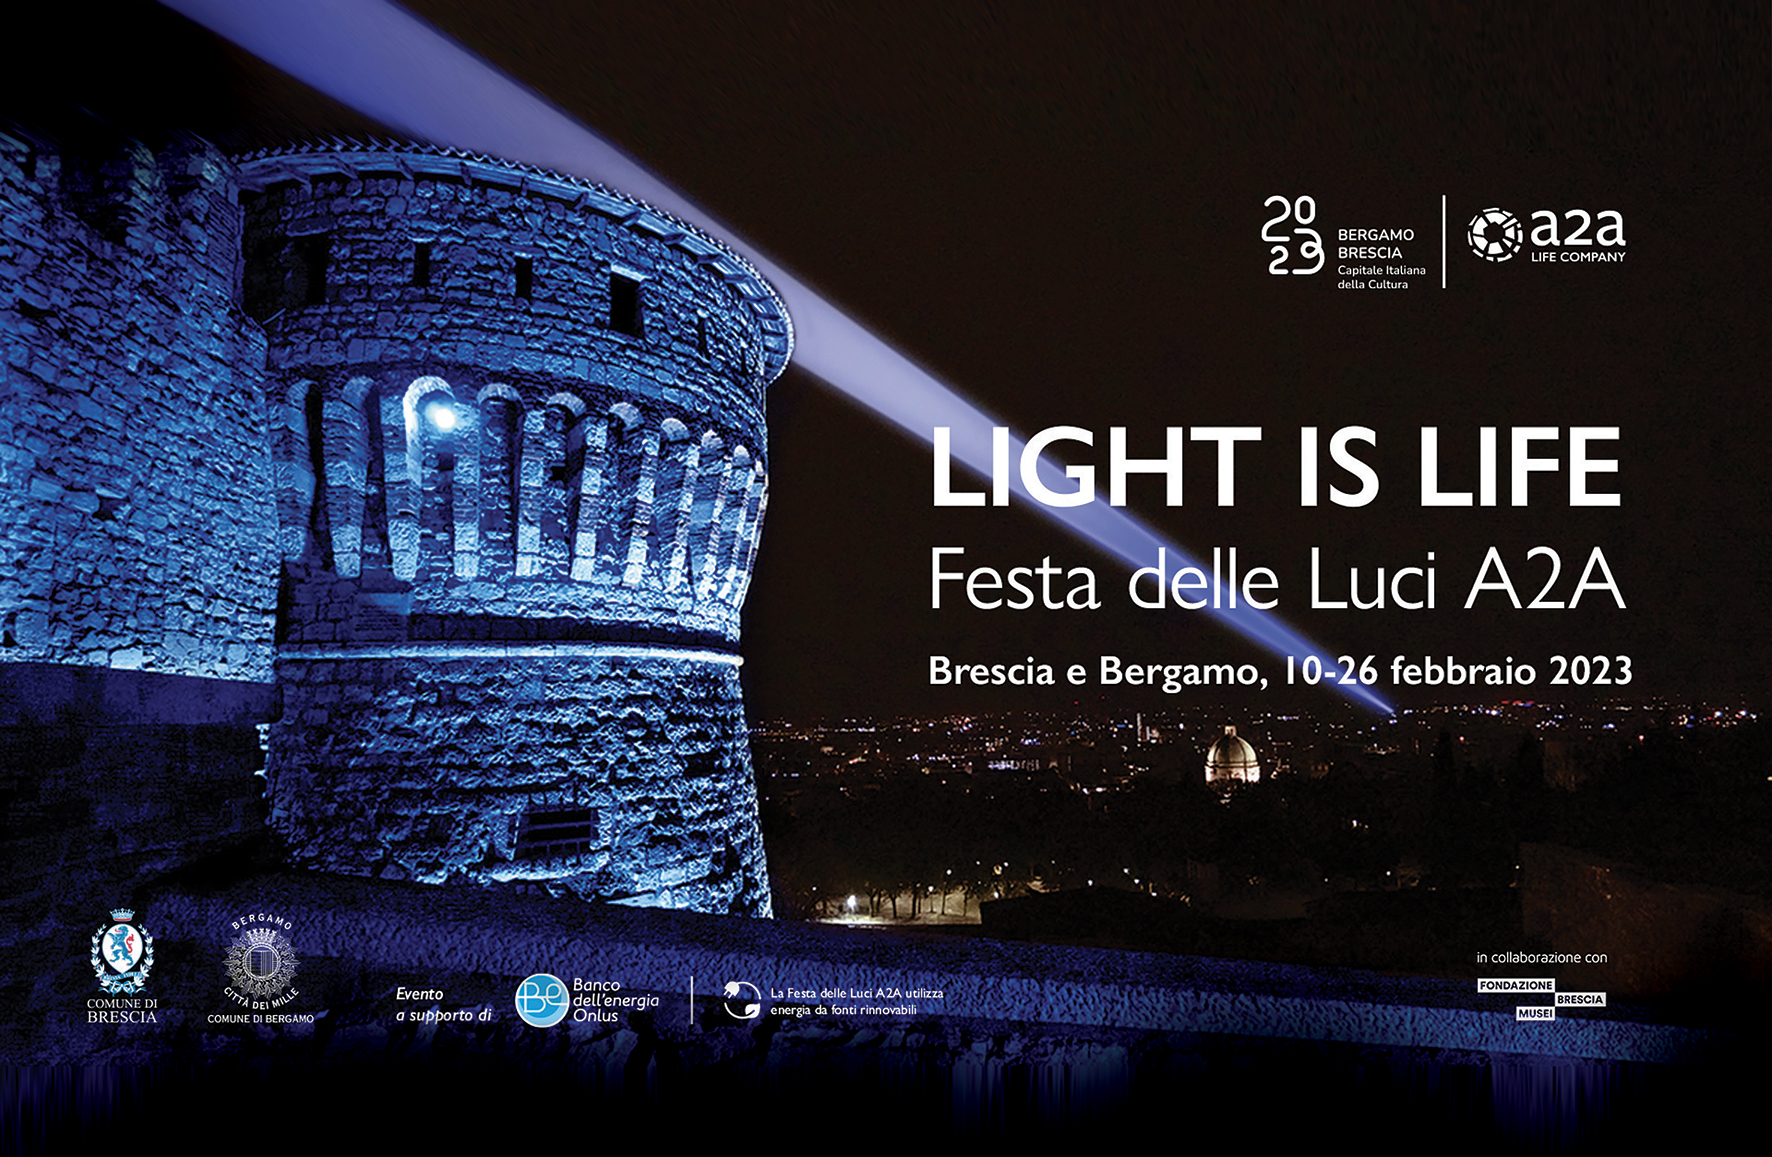 Light is Life. Festa delle luci A2A kicks off - Staff Editoriale